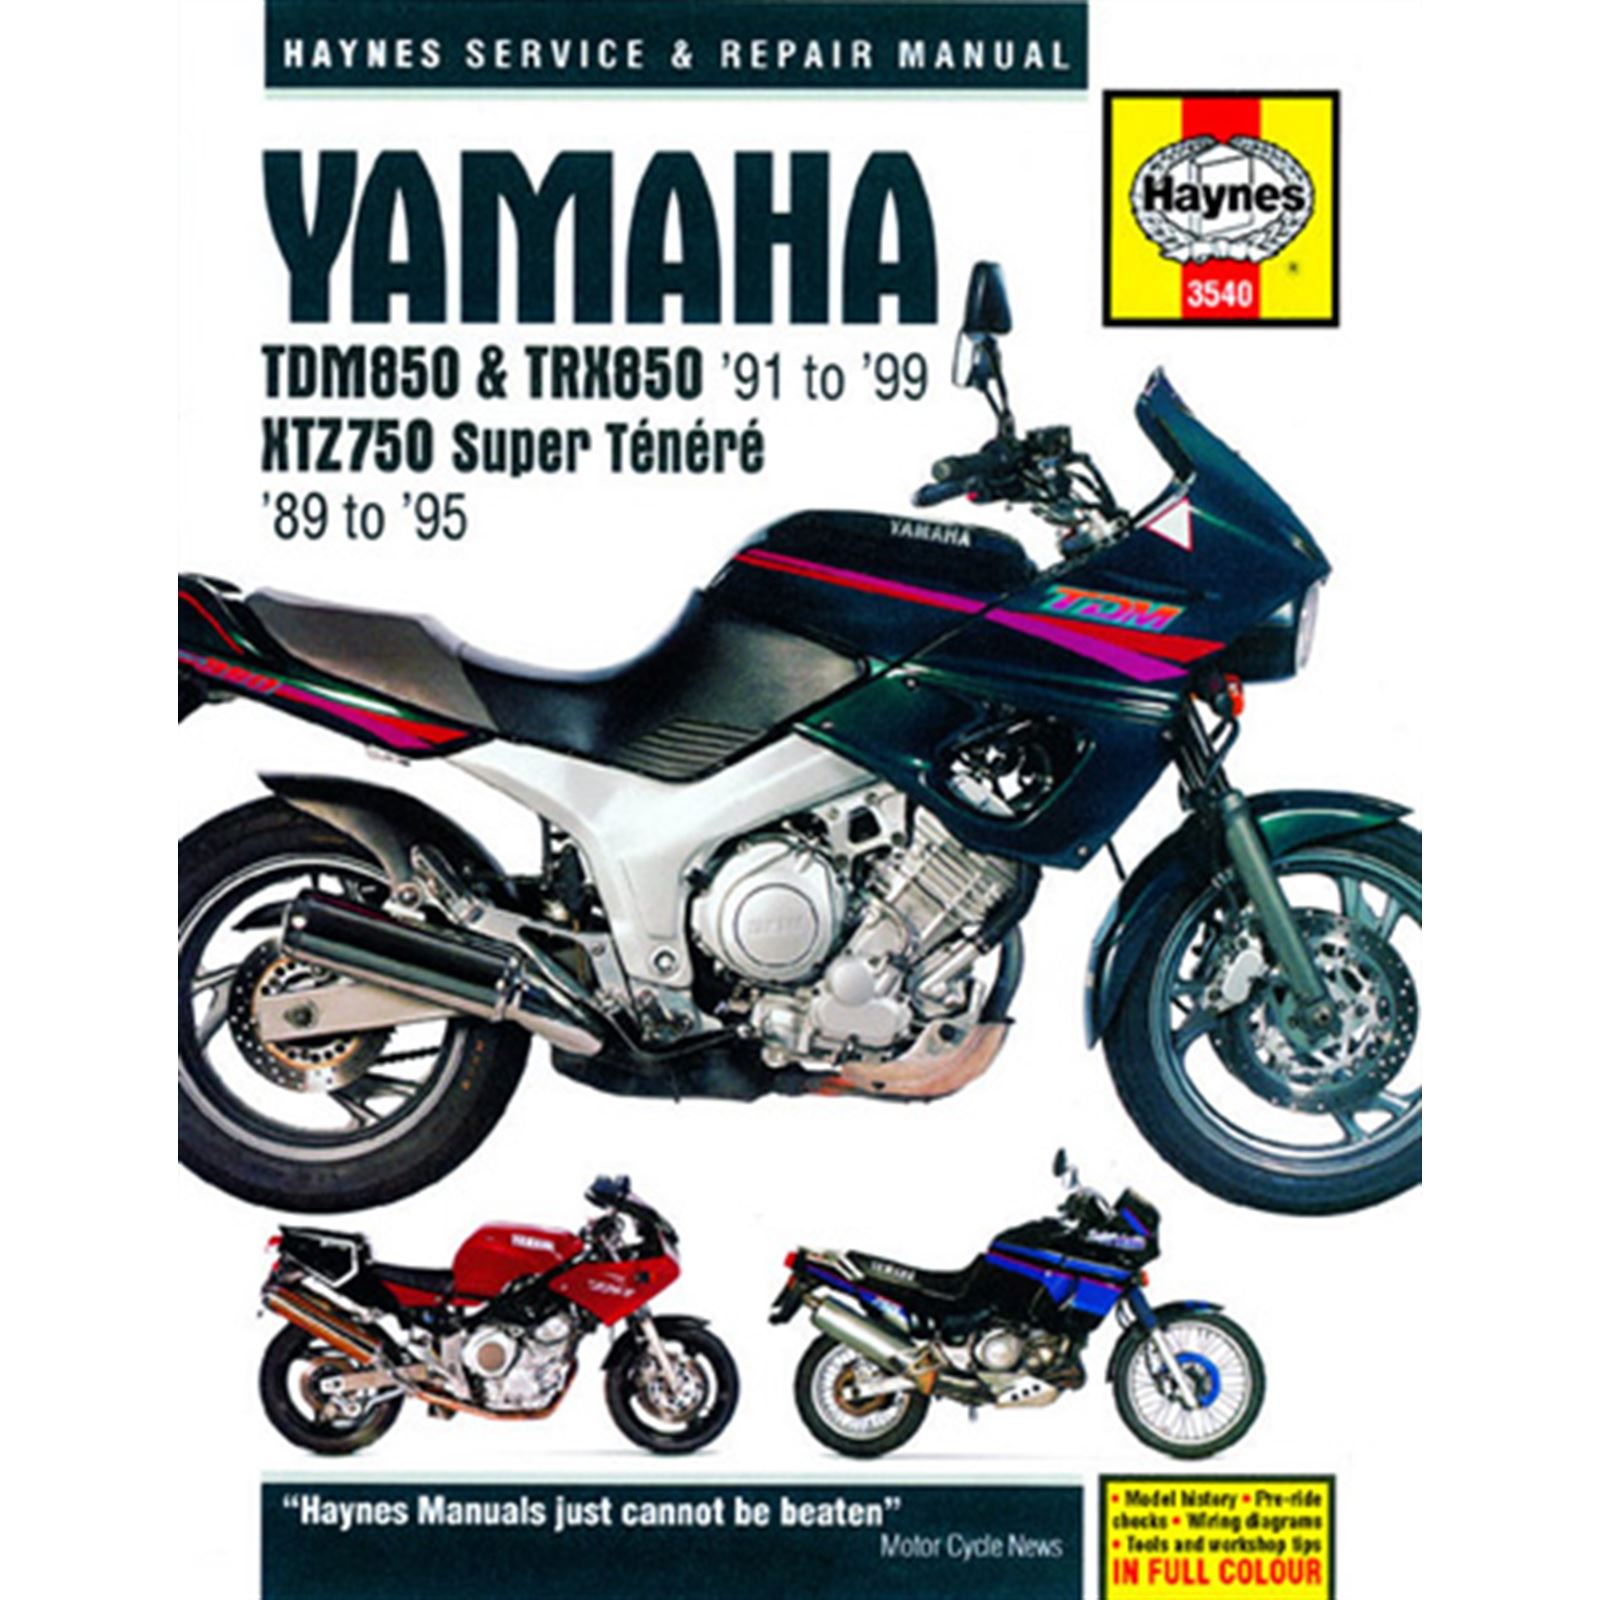 Haynes Manuals Service and Repair Manual for Yamaha